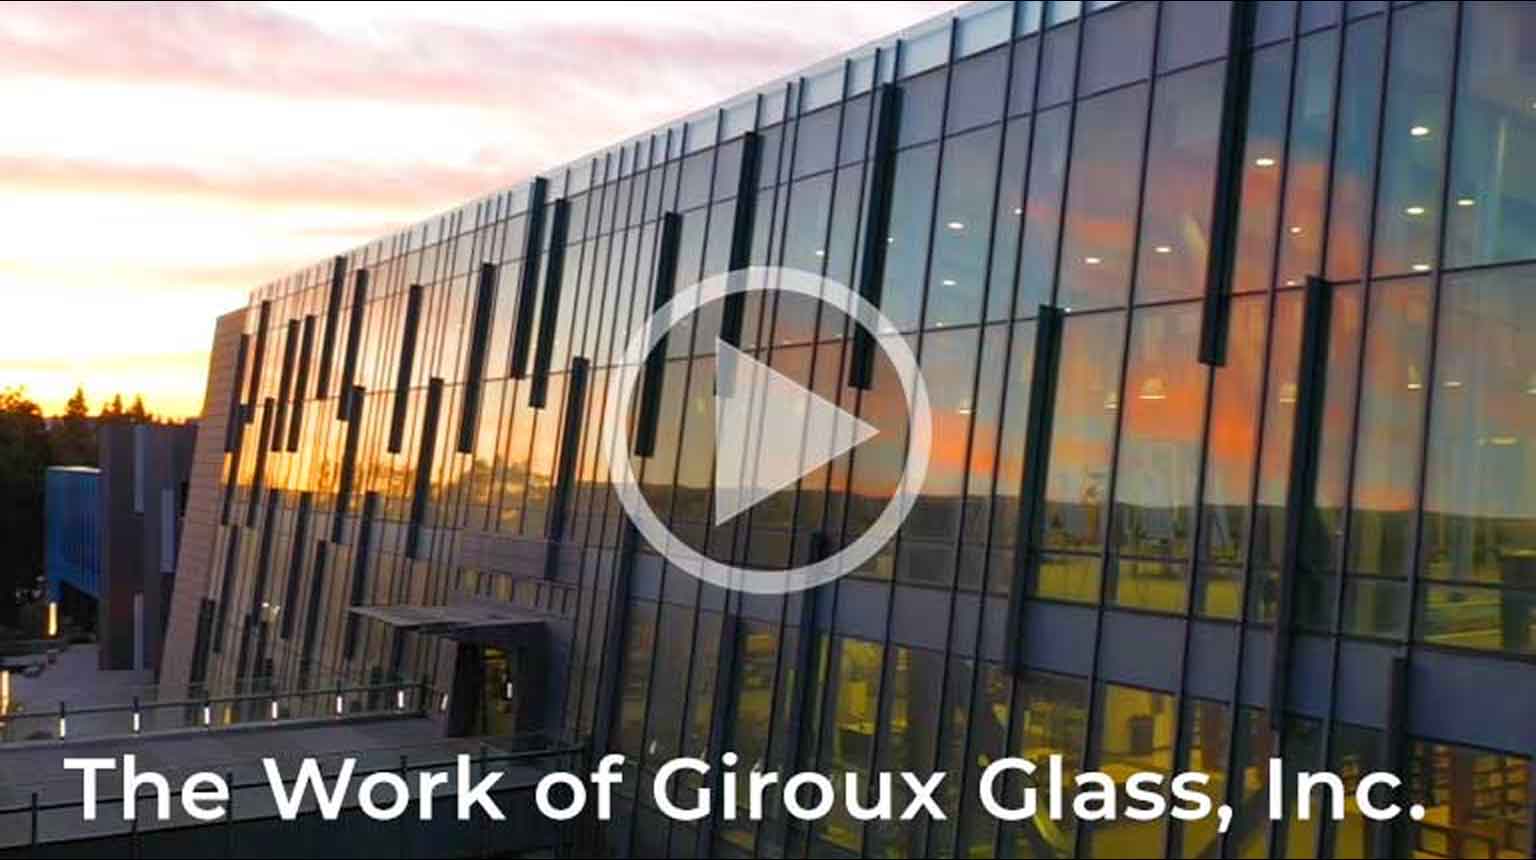 The Work of Giroux Glass, Inc.